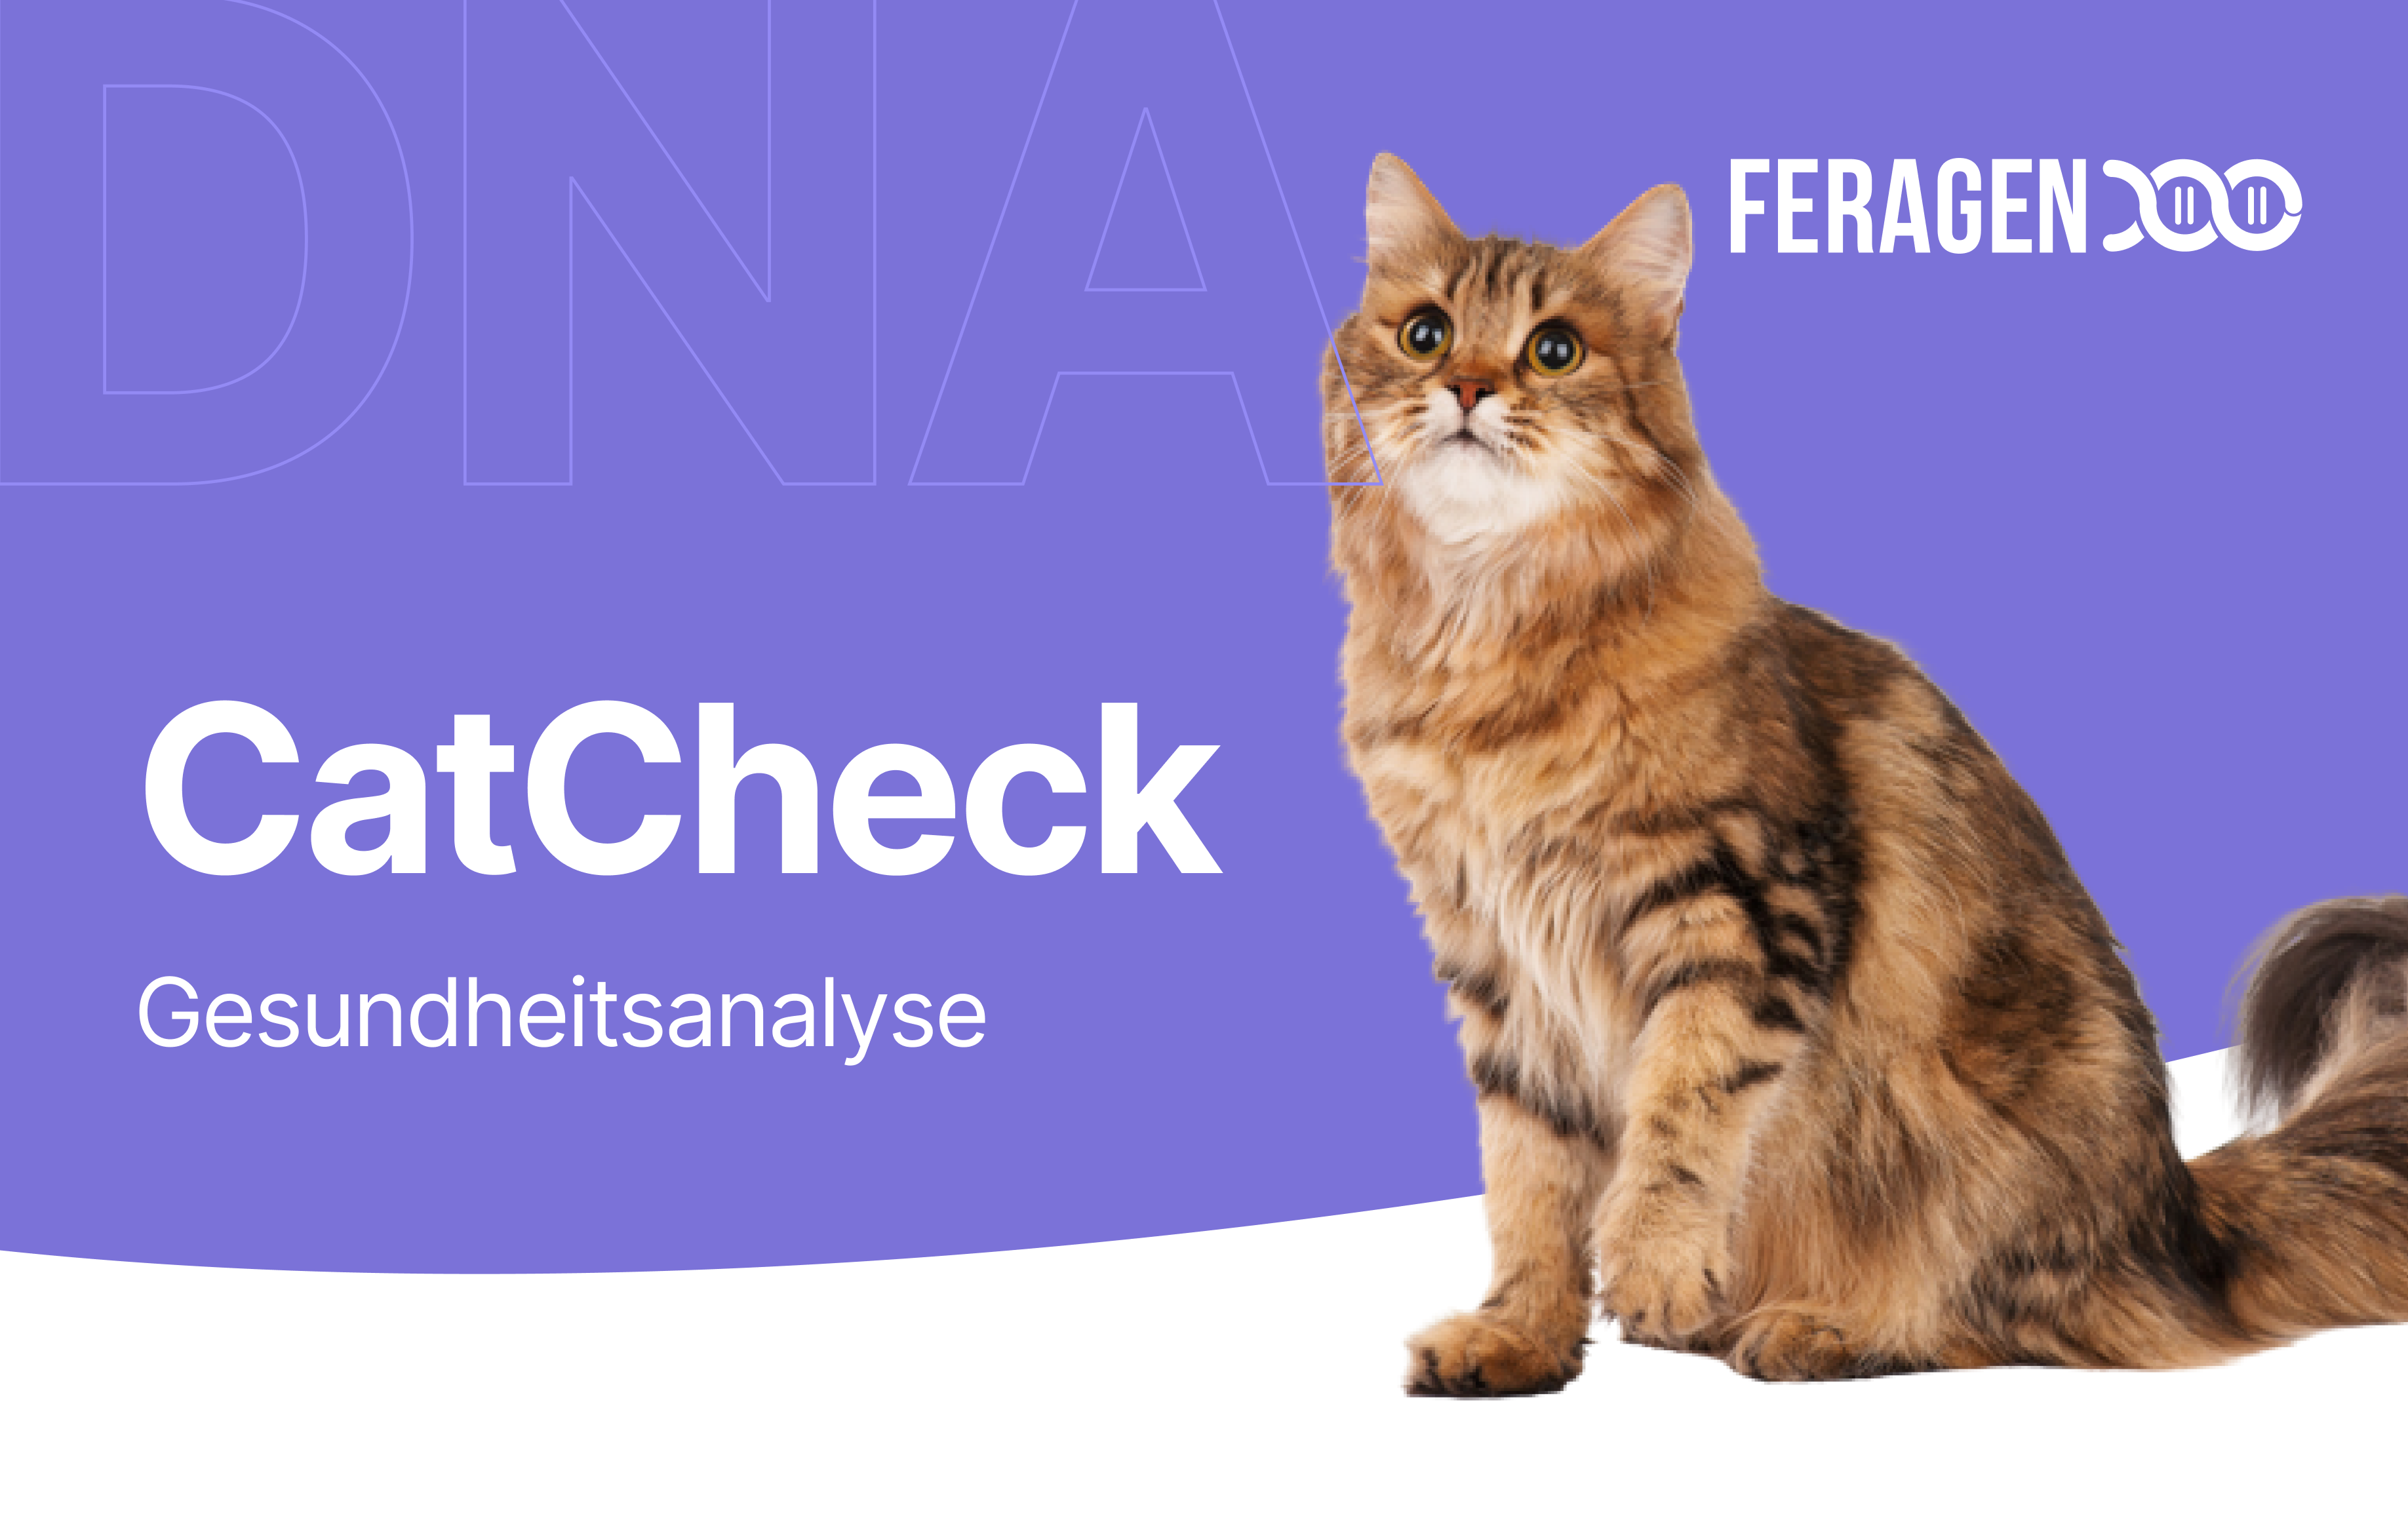 CatCheck health test